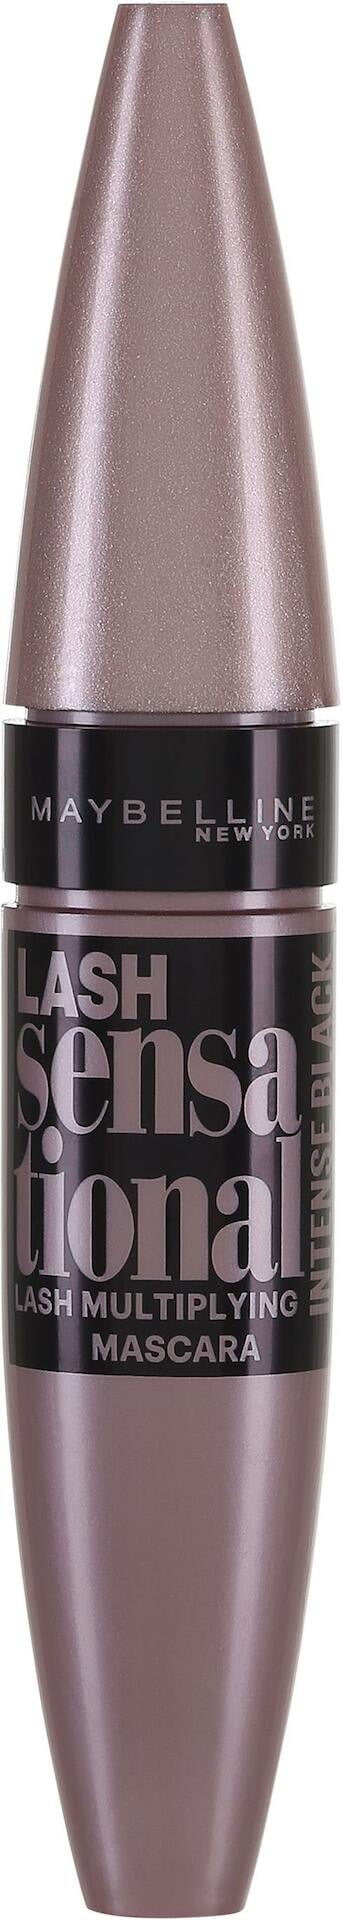 Maybelline New York Lash Sensational Mascara Intense Black